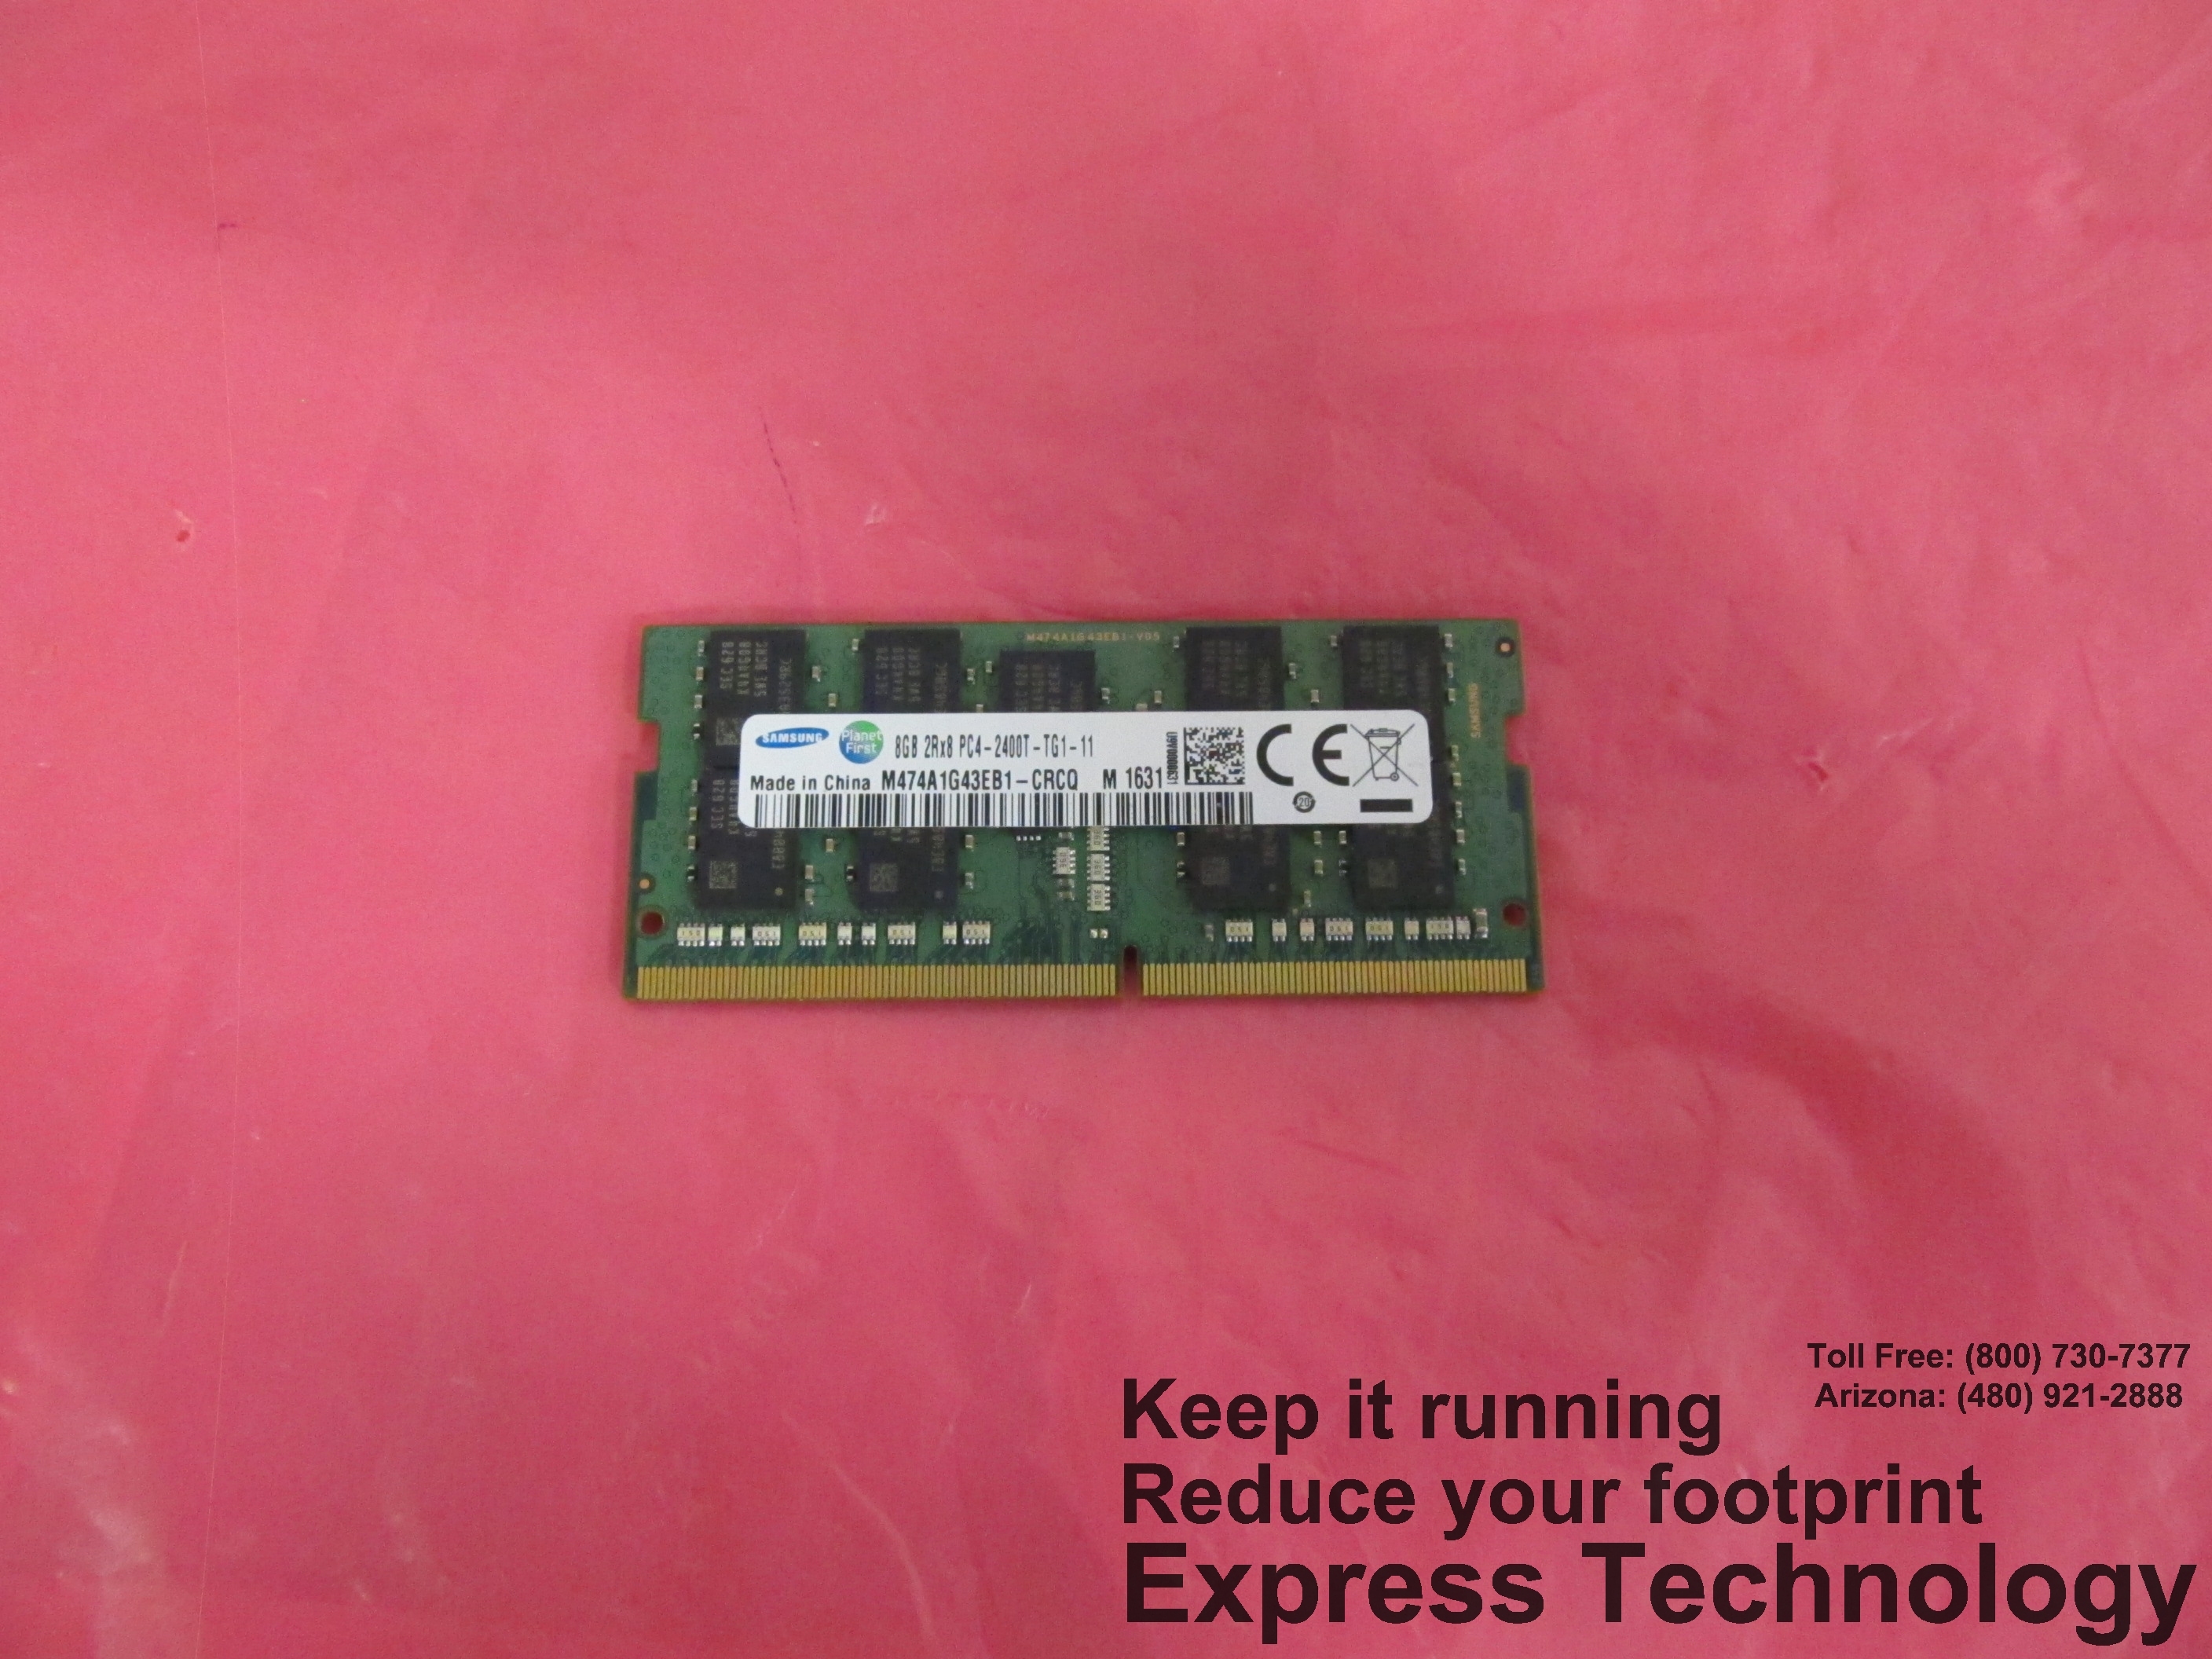 A-Tech 32GB Module for ASRock EP2C612D8C DDR4 PC4-19200 2400Mhz ECC Registered RDIMM 2rx4 Server Memory Ram AT395745SRV-X1R10